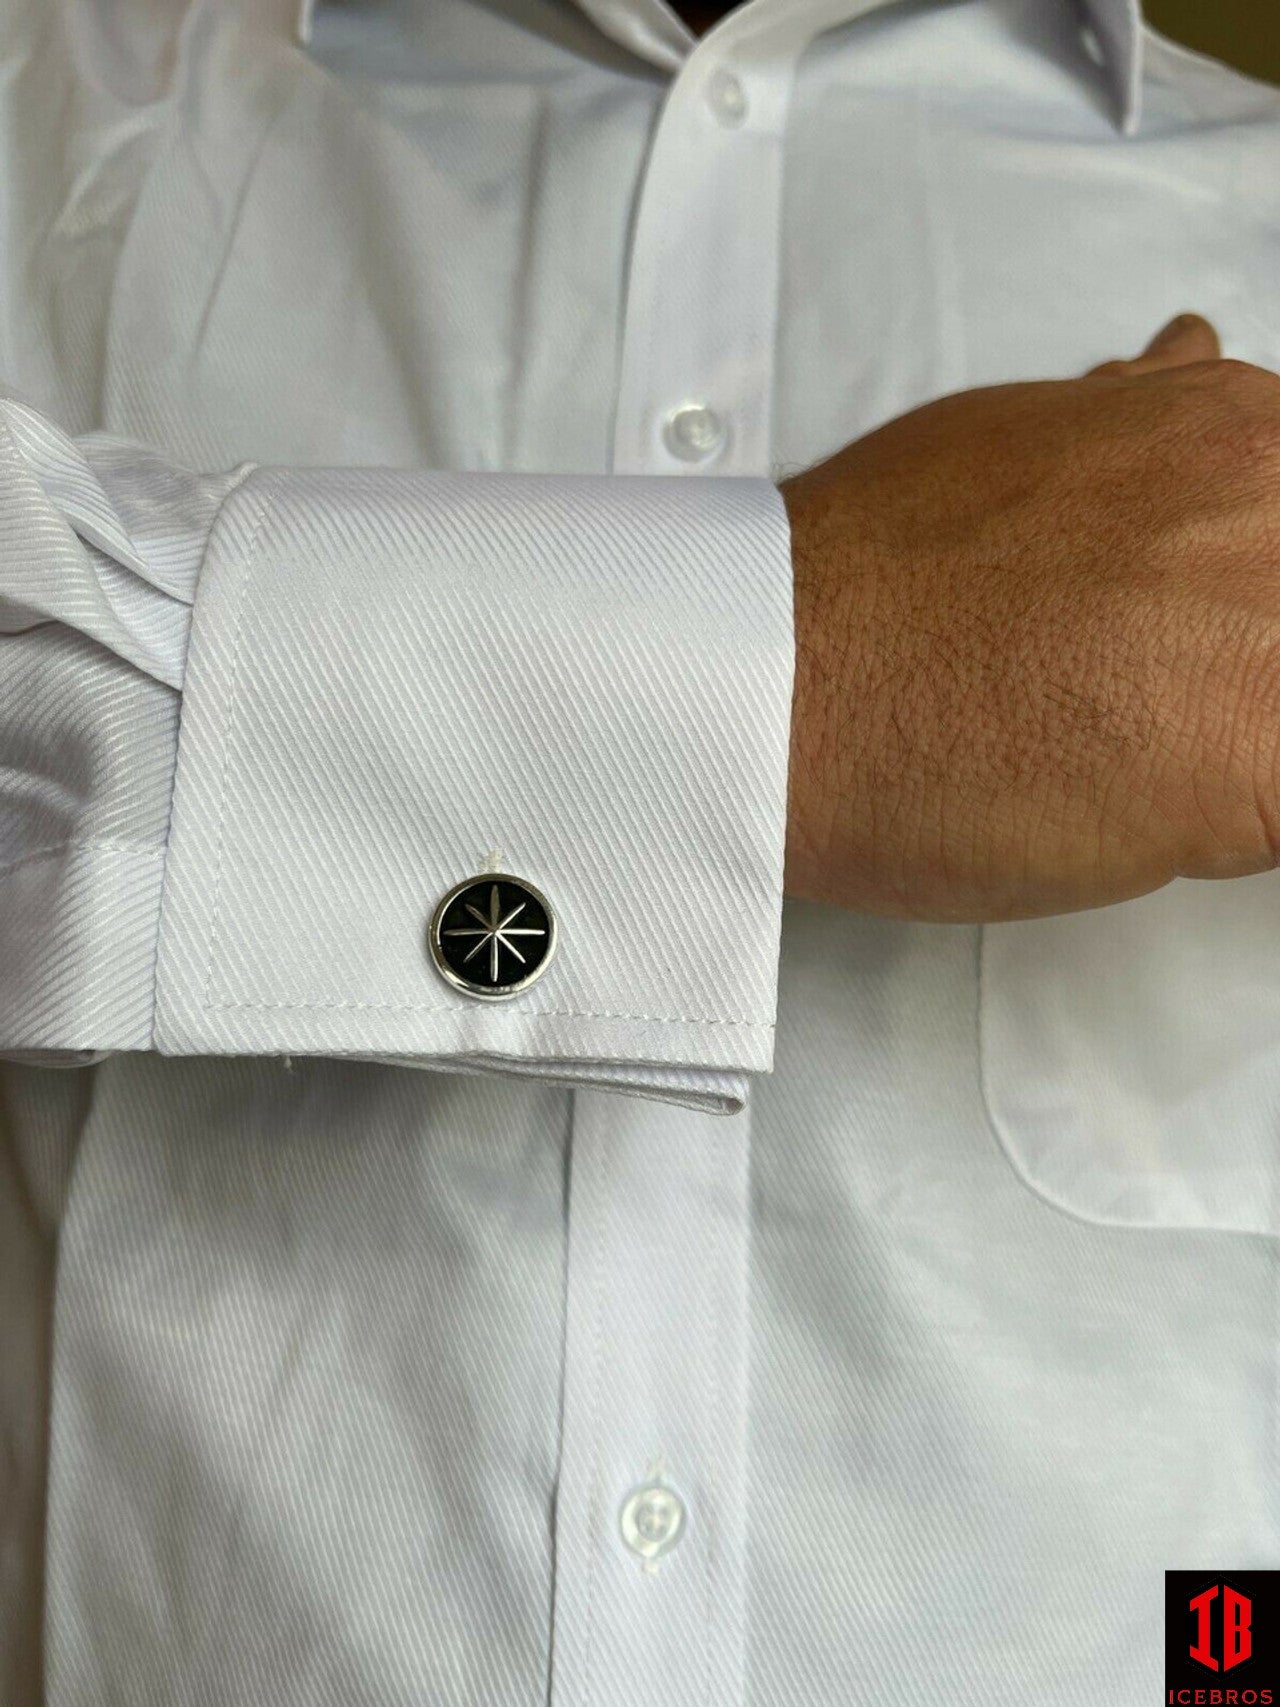 Real 925 Sterling Silver Black Navigation Star Cuff Links Cufflinks Tuxedo Shirt